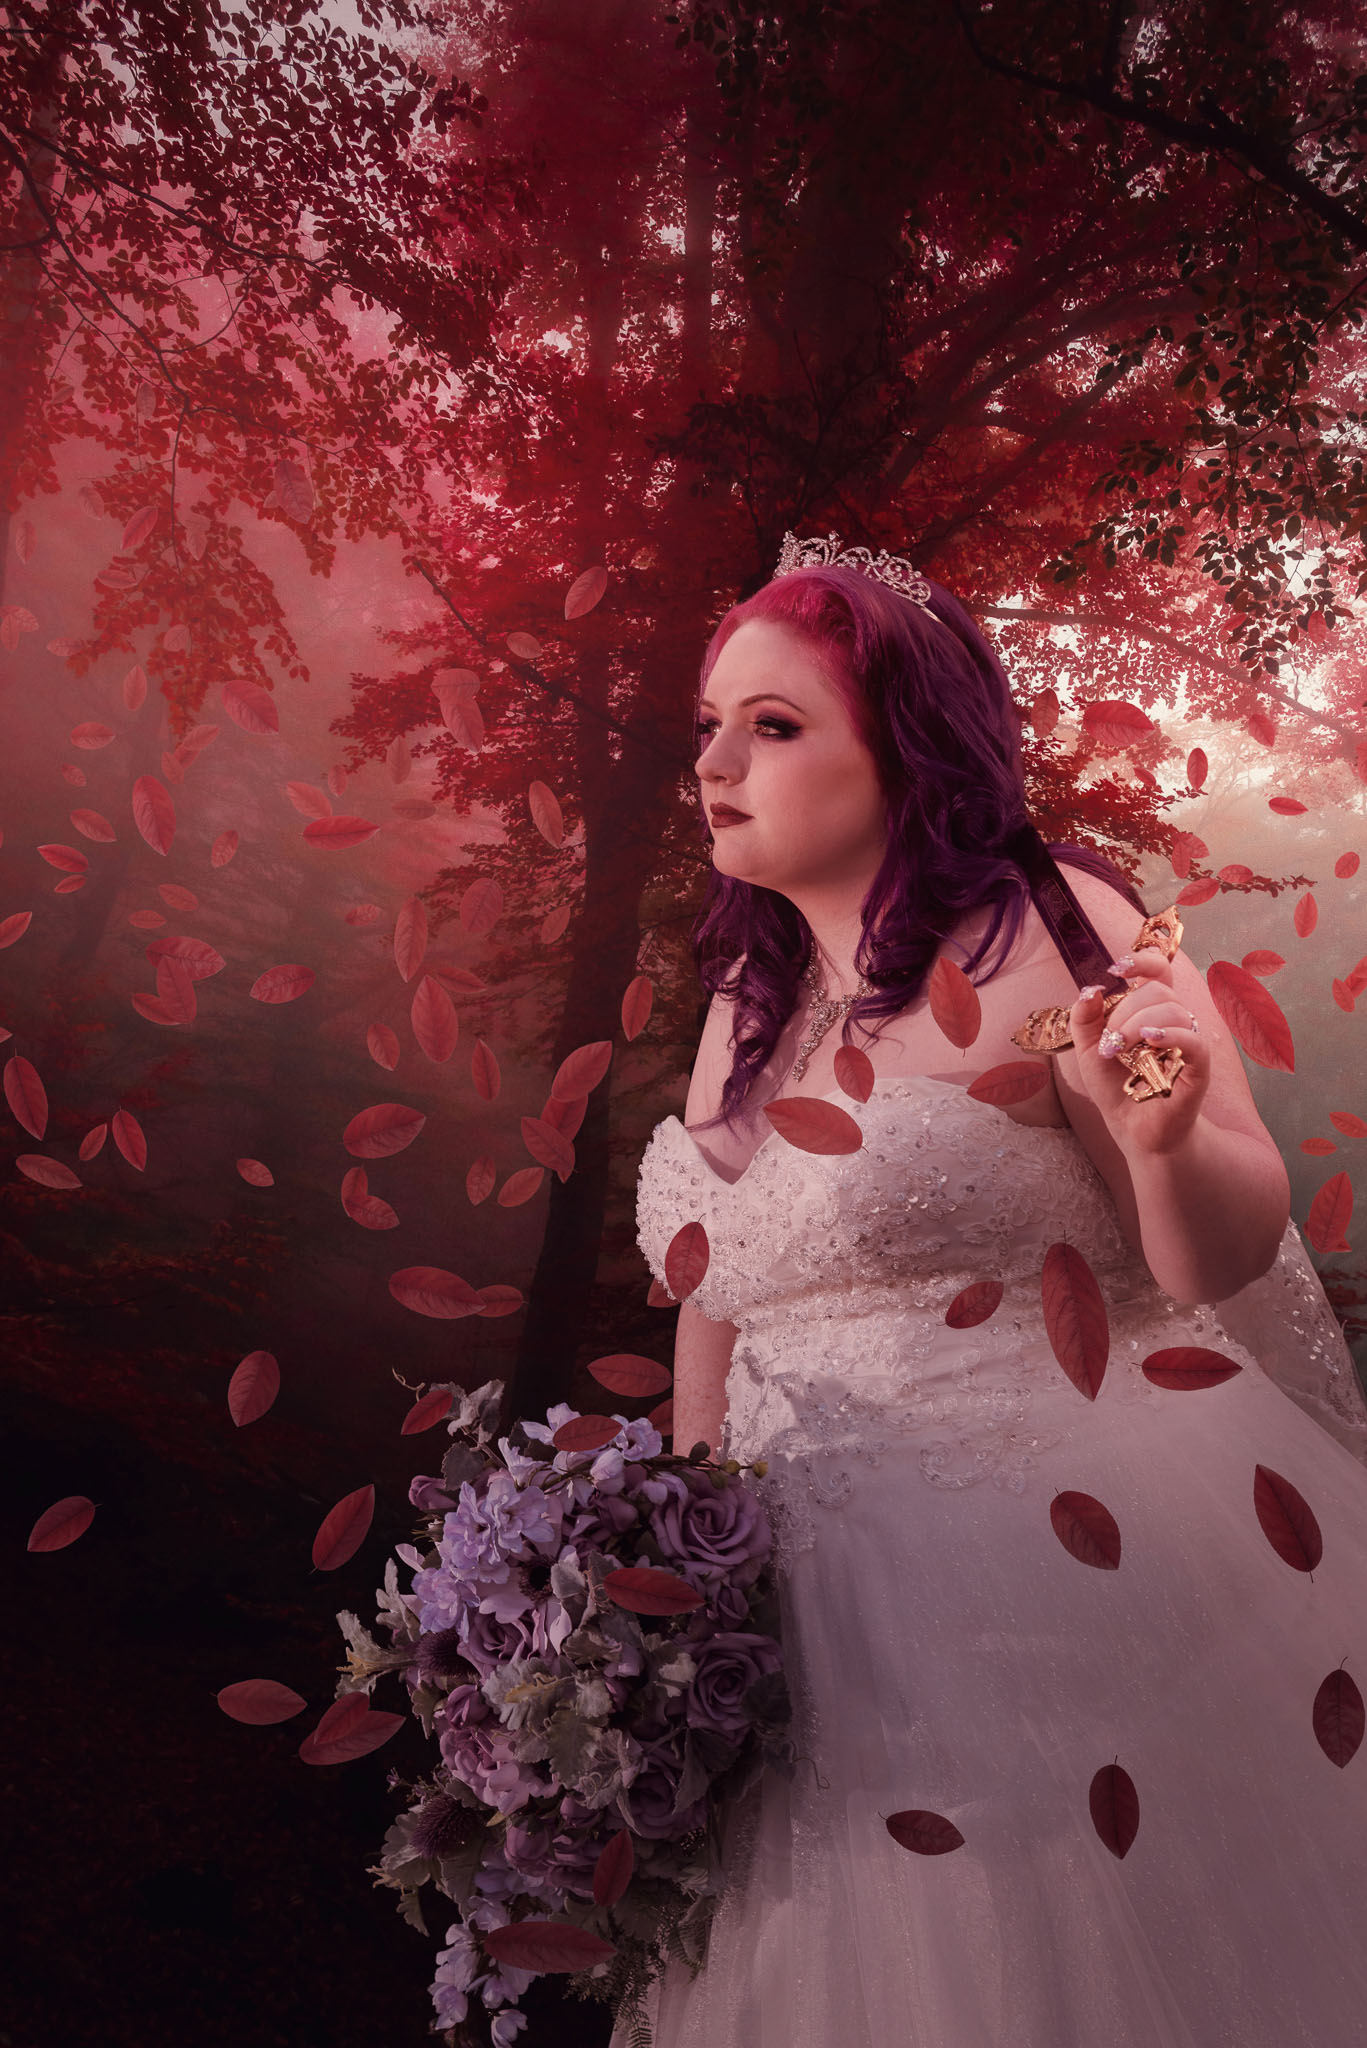 creative wedding art inspired by fantasy films AJT Images Warwickshire